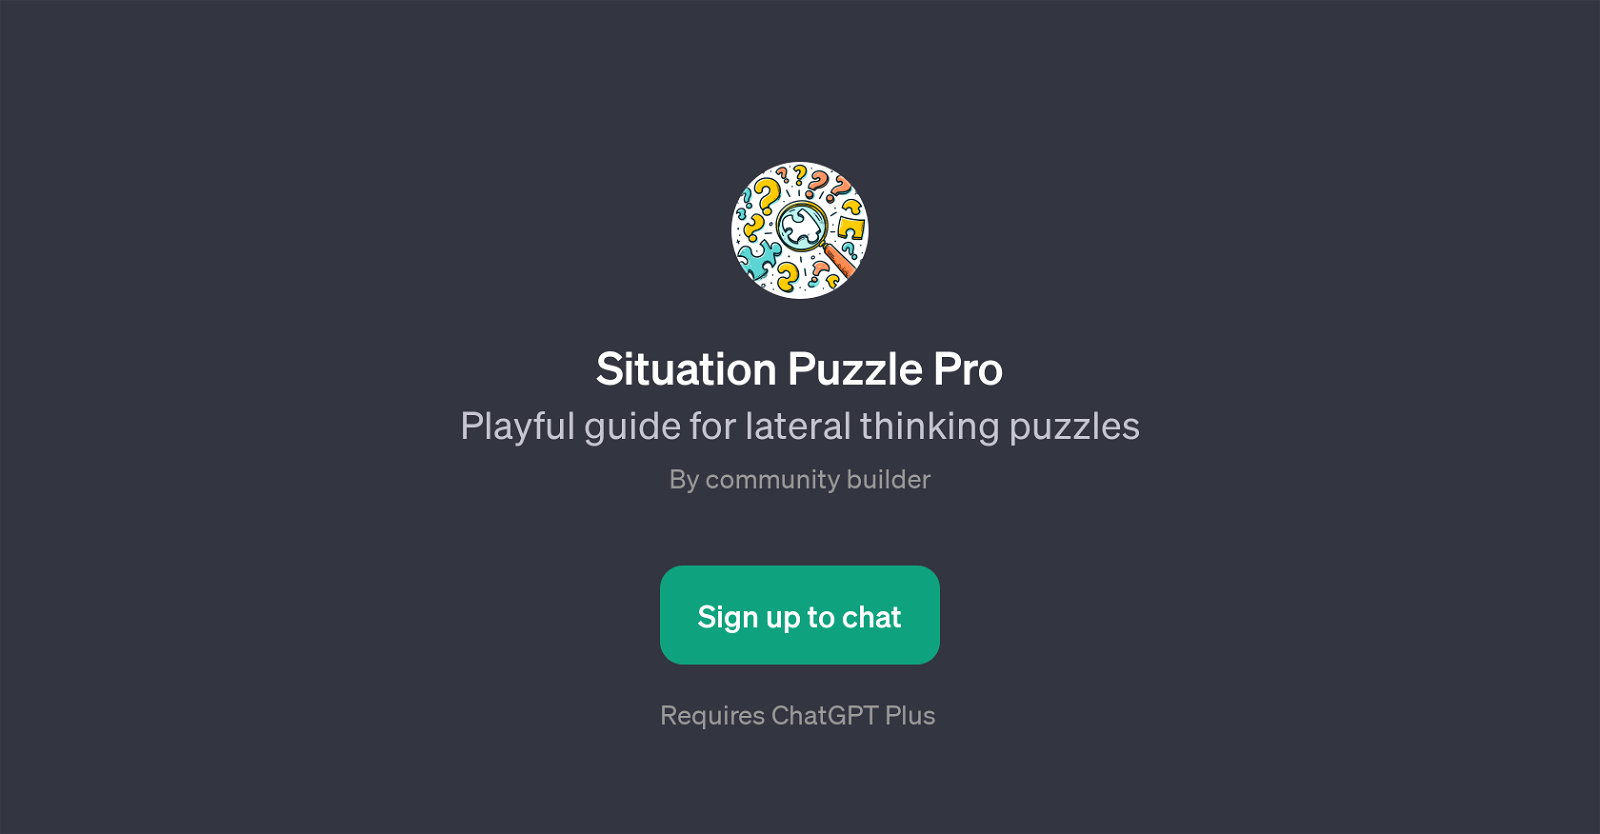 Situation Puzzle Pro website